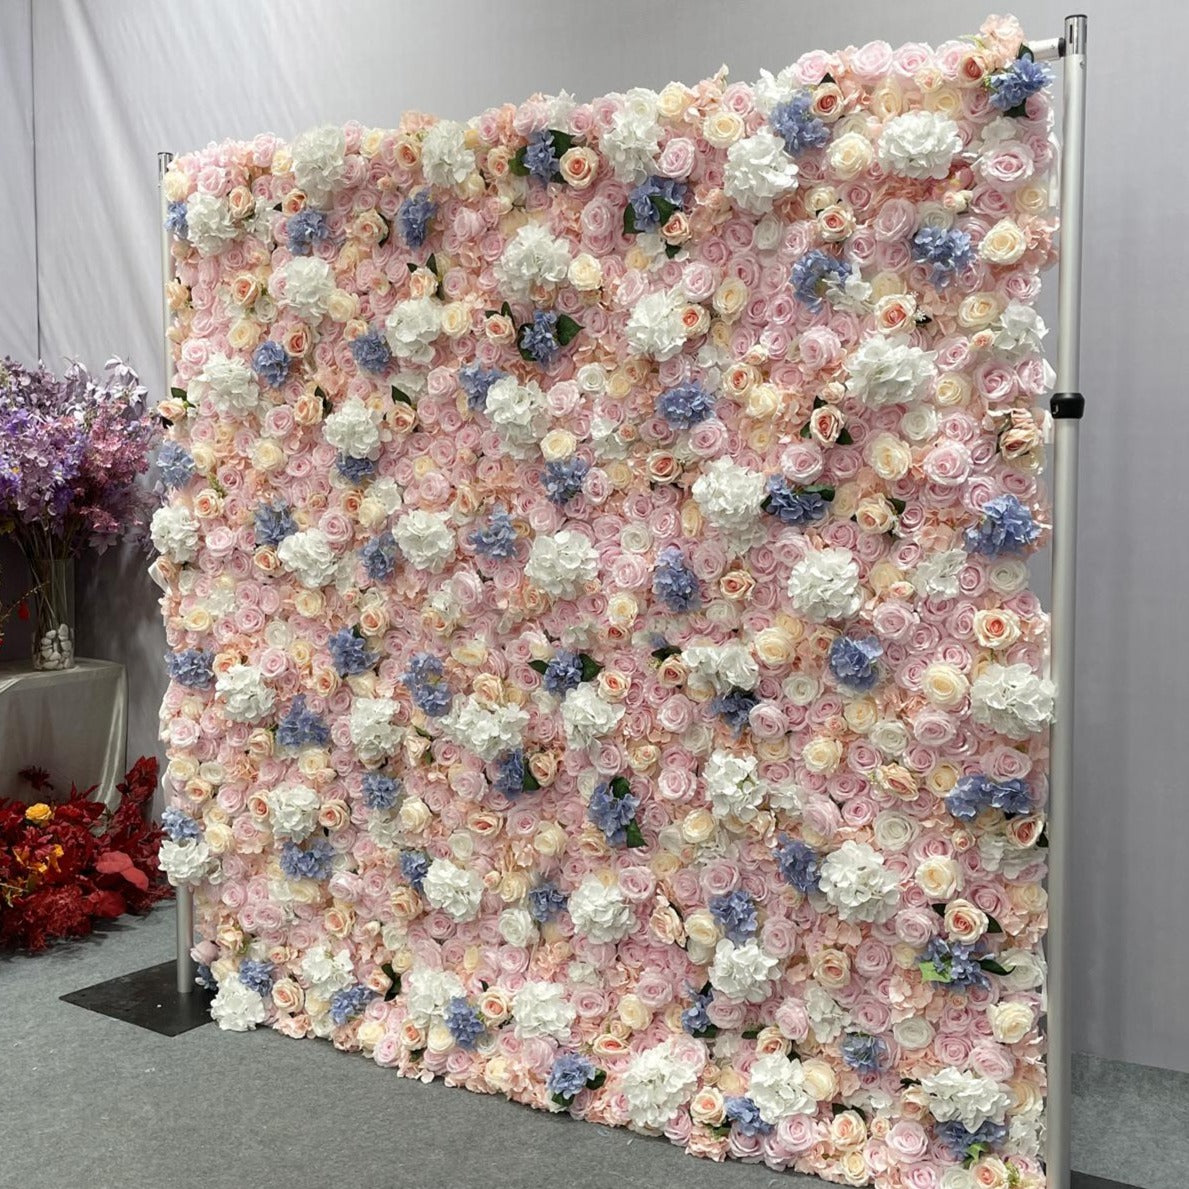 3D Artificial Flower Wall Arrangement Wedding Party Birthday Backdrop Decor HQ3701